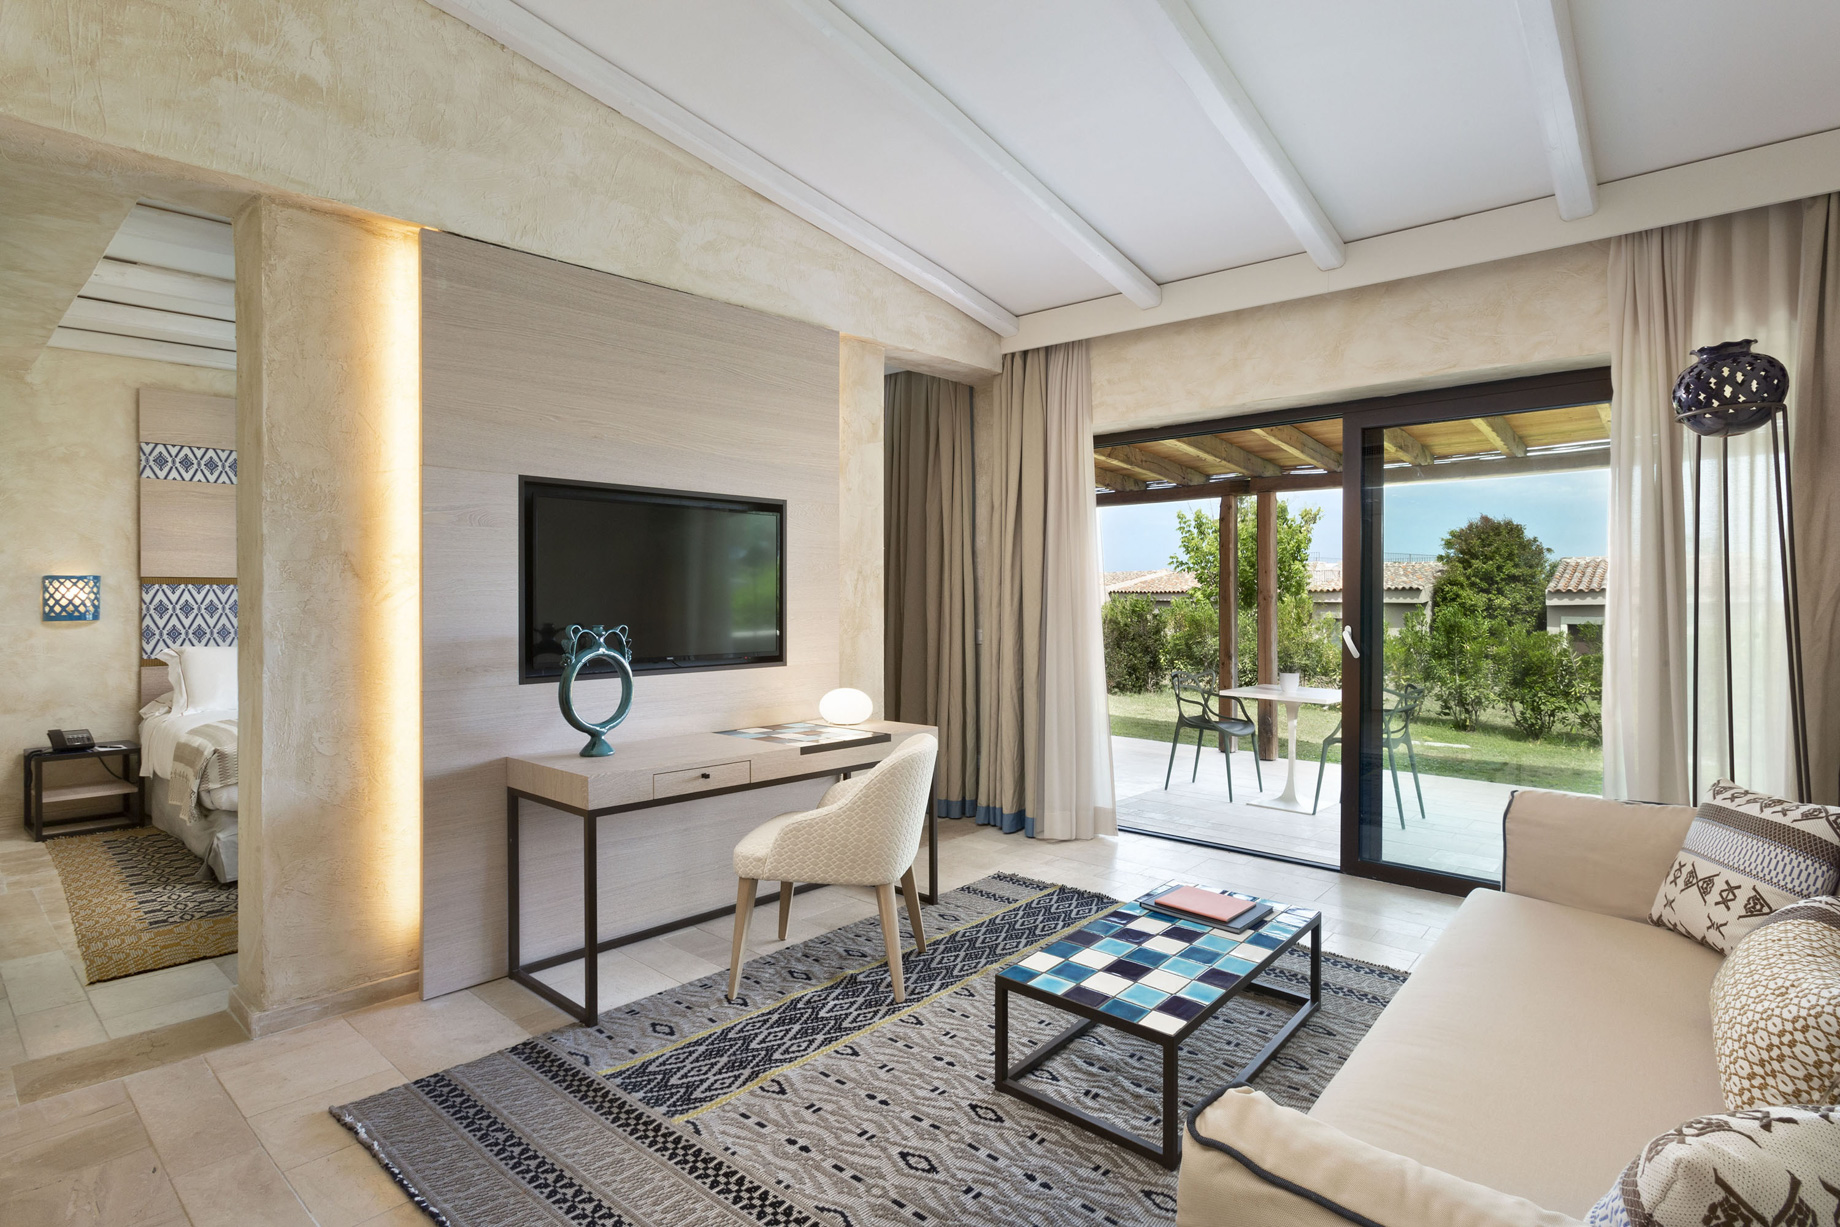 Baglioni Resort Sardinia – San Teodoro, Sardegna, Italy – Rooftop Terrace Suite Living Room